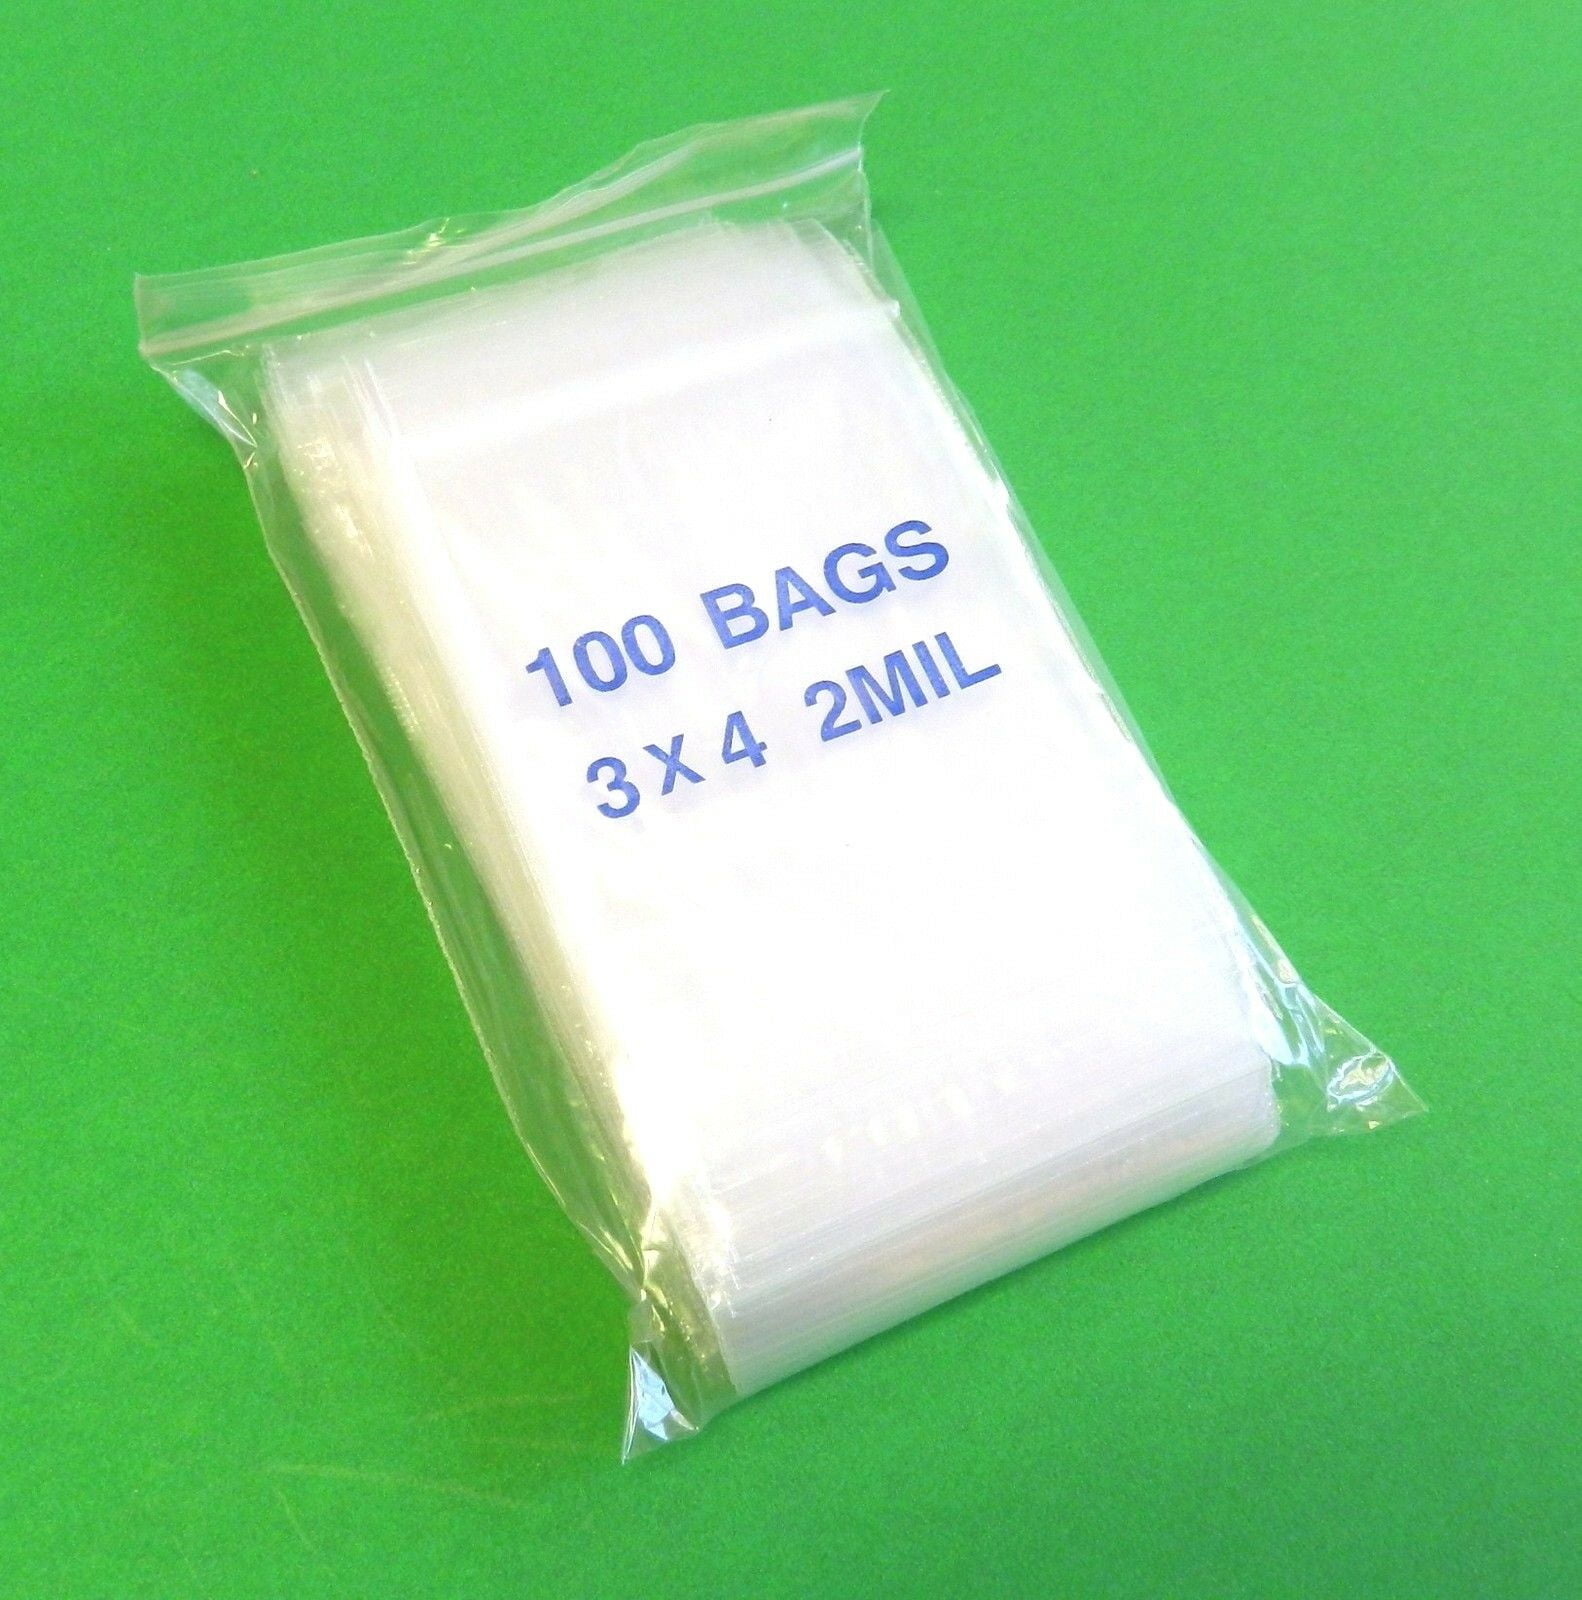 200-3" x 4" 3x4 Zip Lock Ziplock Plastic Bags 2 MIL storage shipping supplies